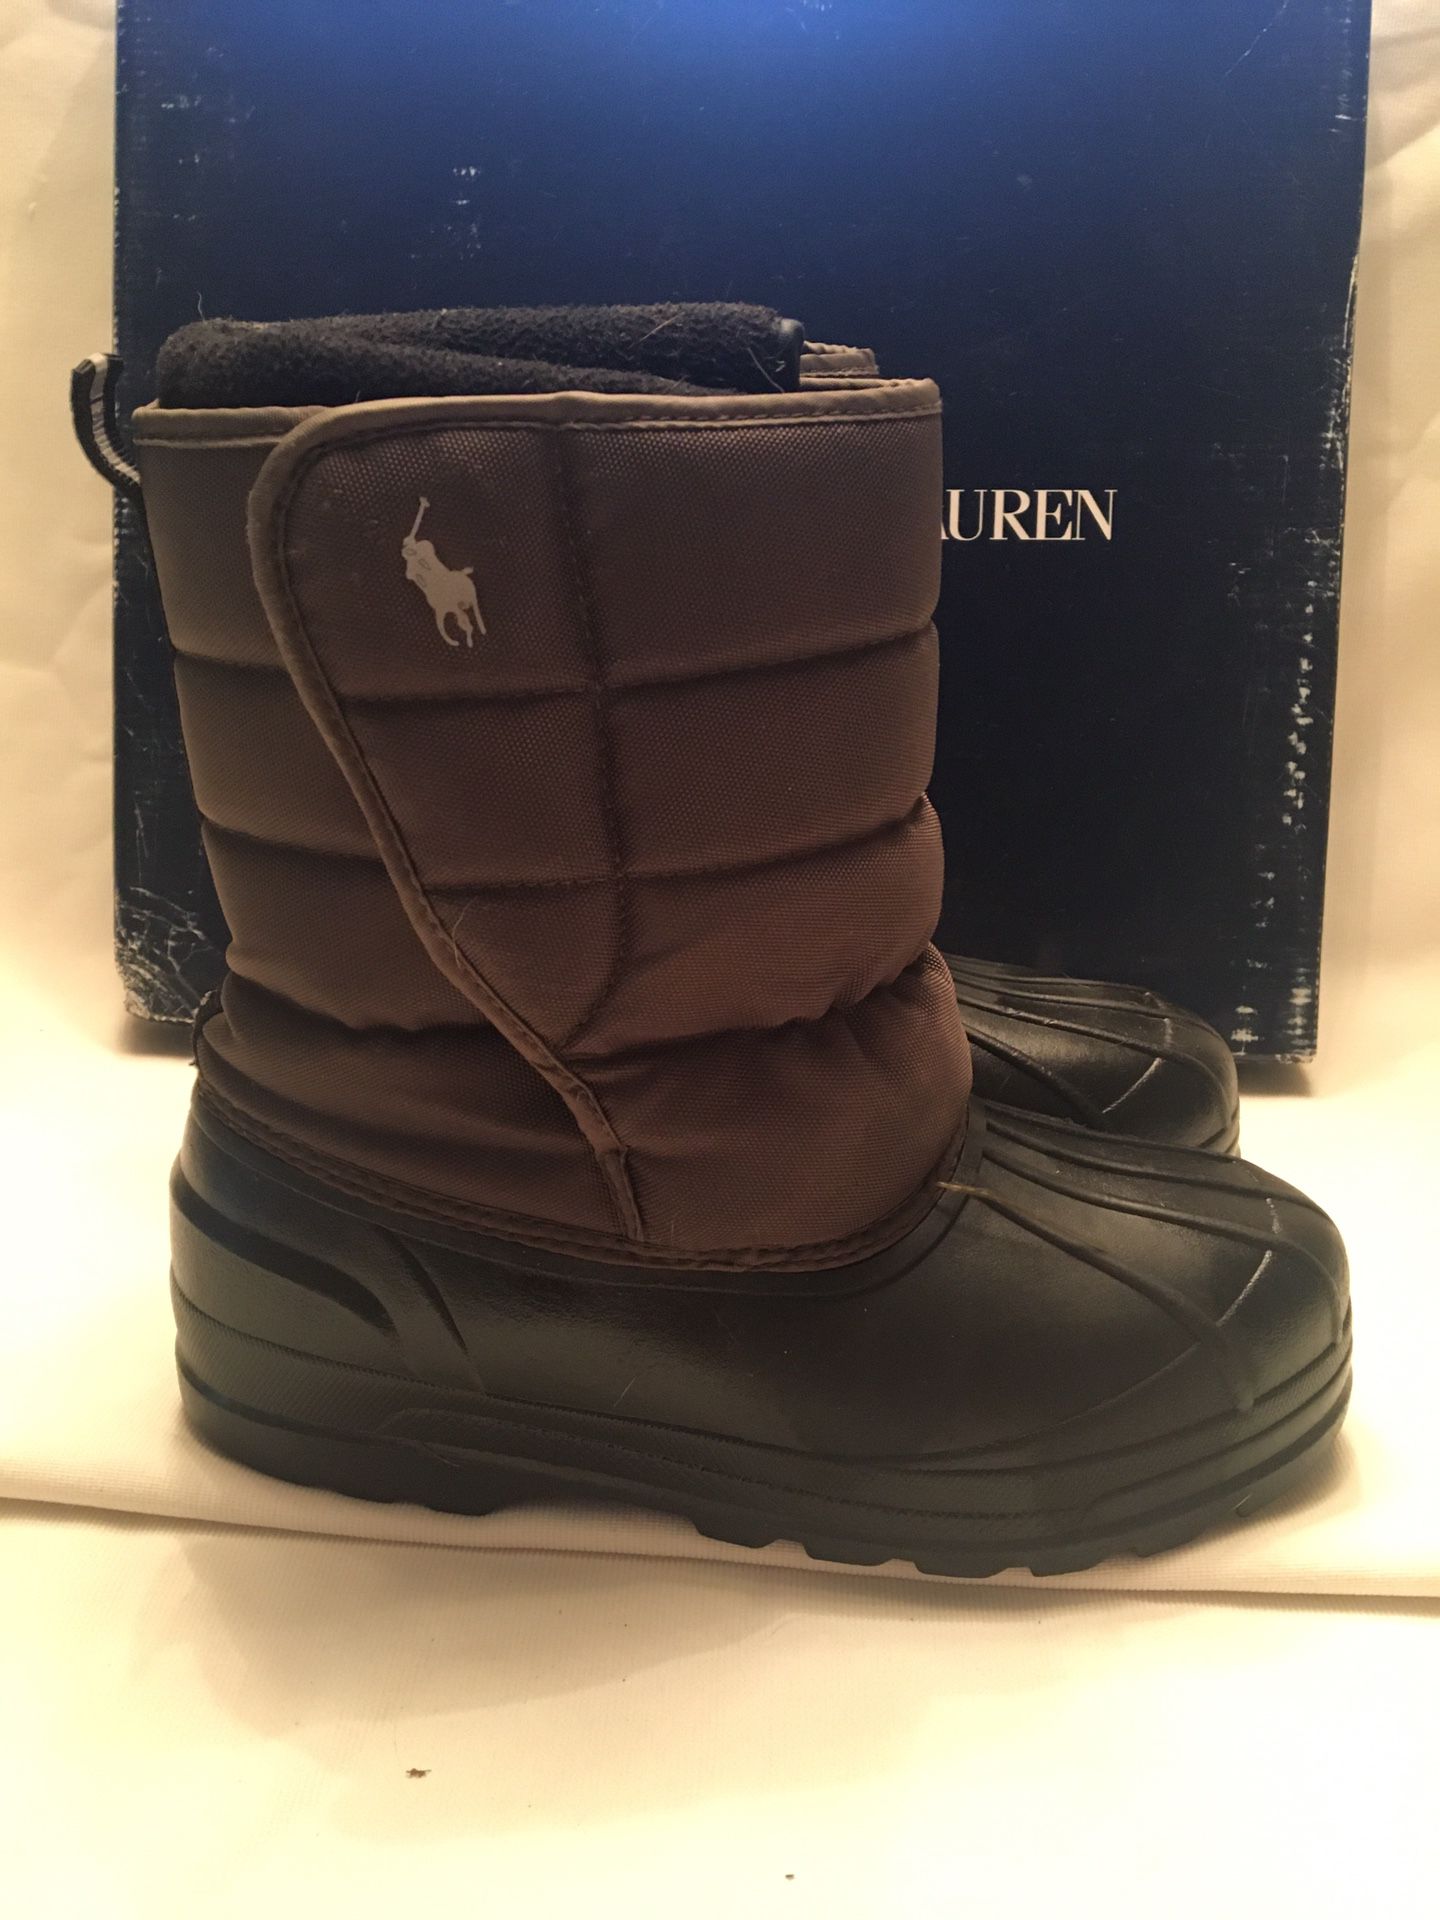 Boys Ralph Lauren snow Boots Size 5 Like New